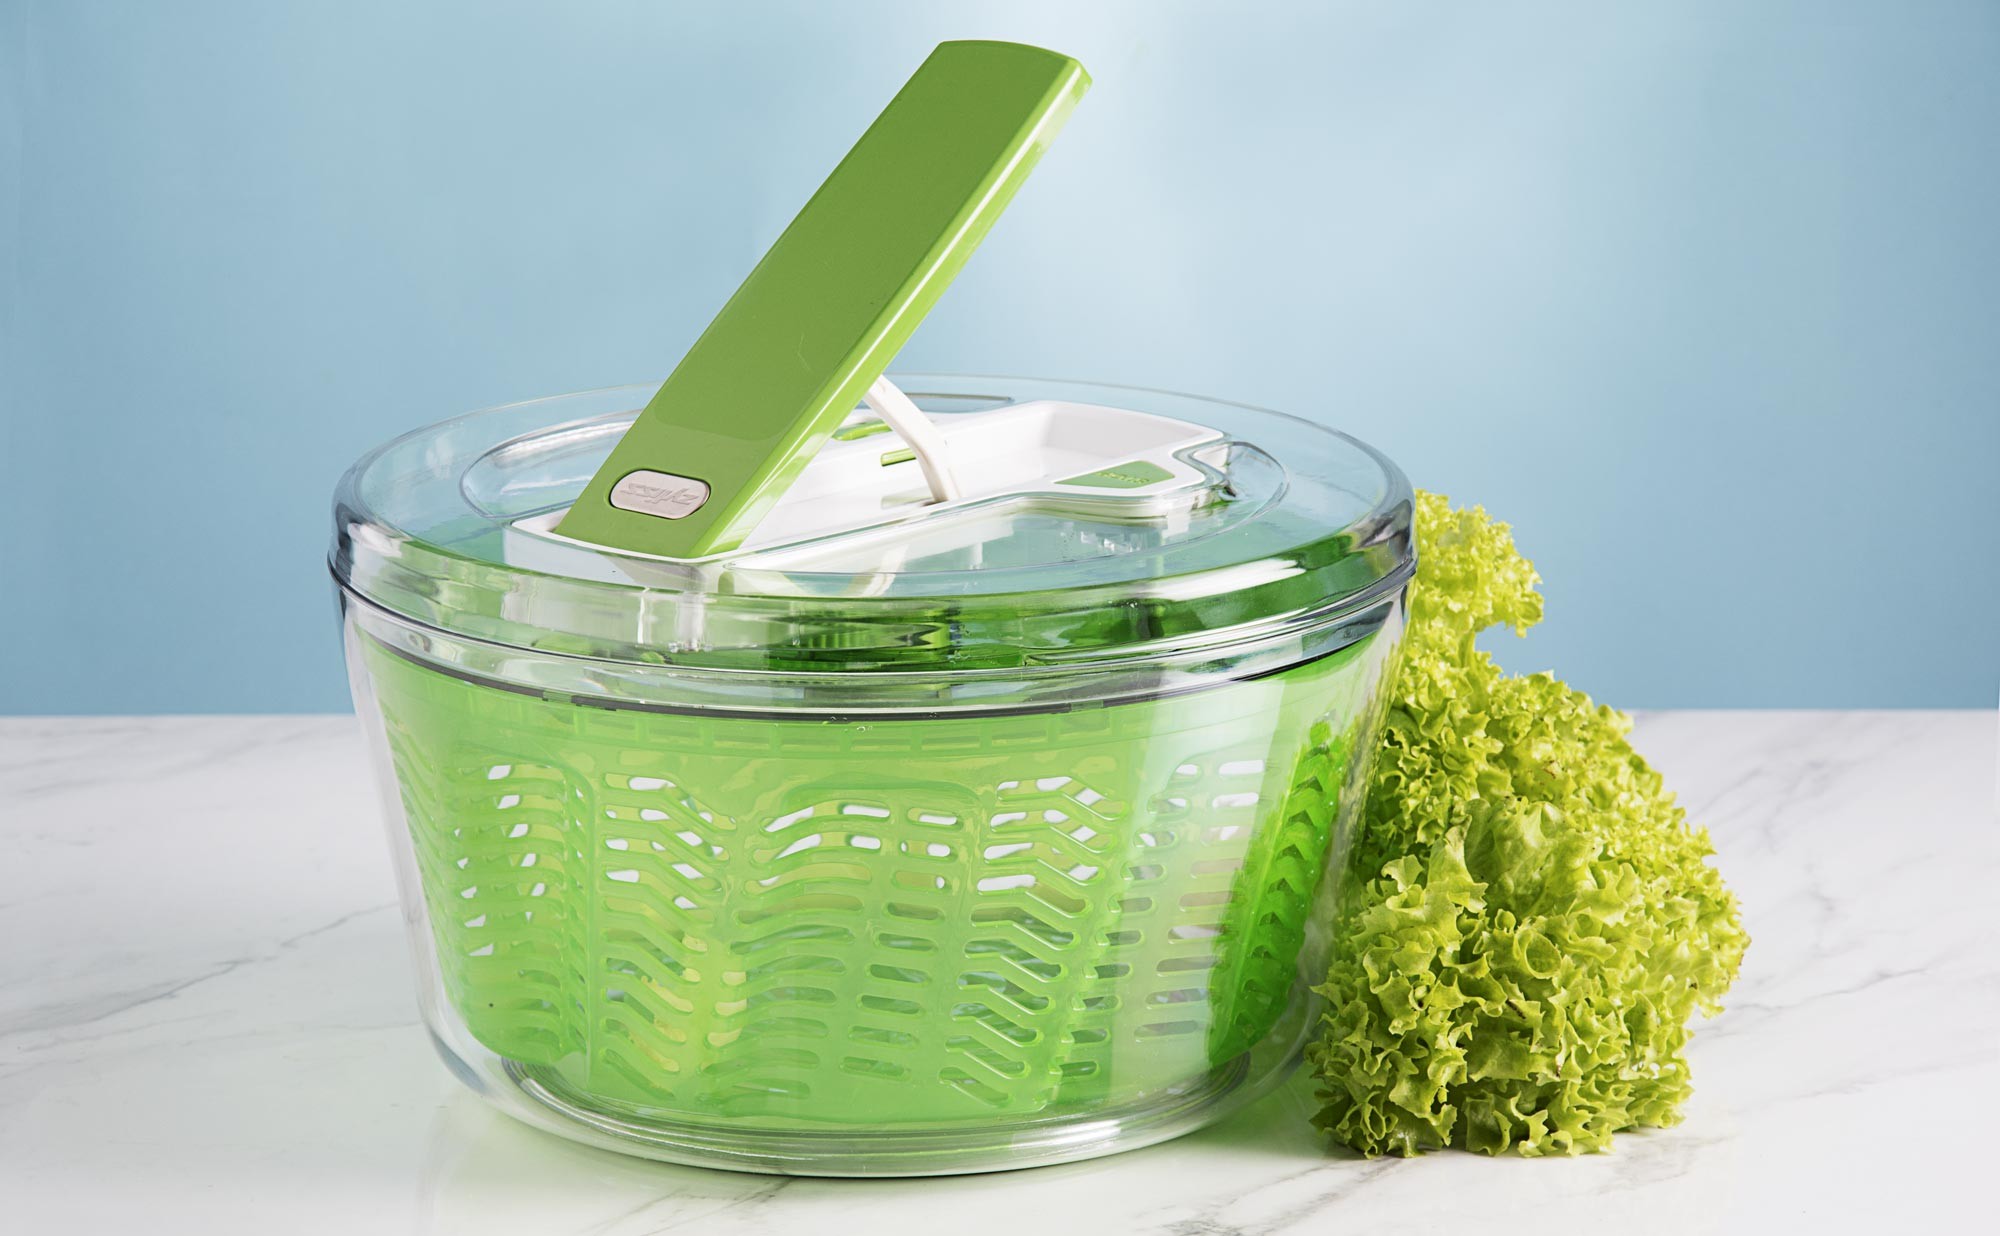 ZYLISS Essoreuse à salade Easy Spinner, grande, verte, sans BPA :  : Cuisine et Maison